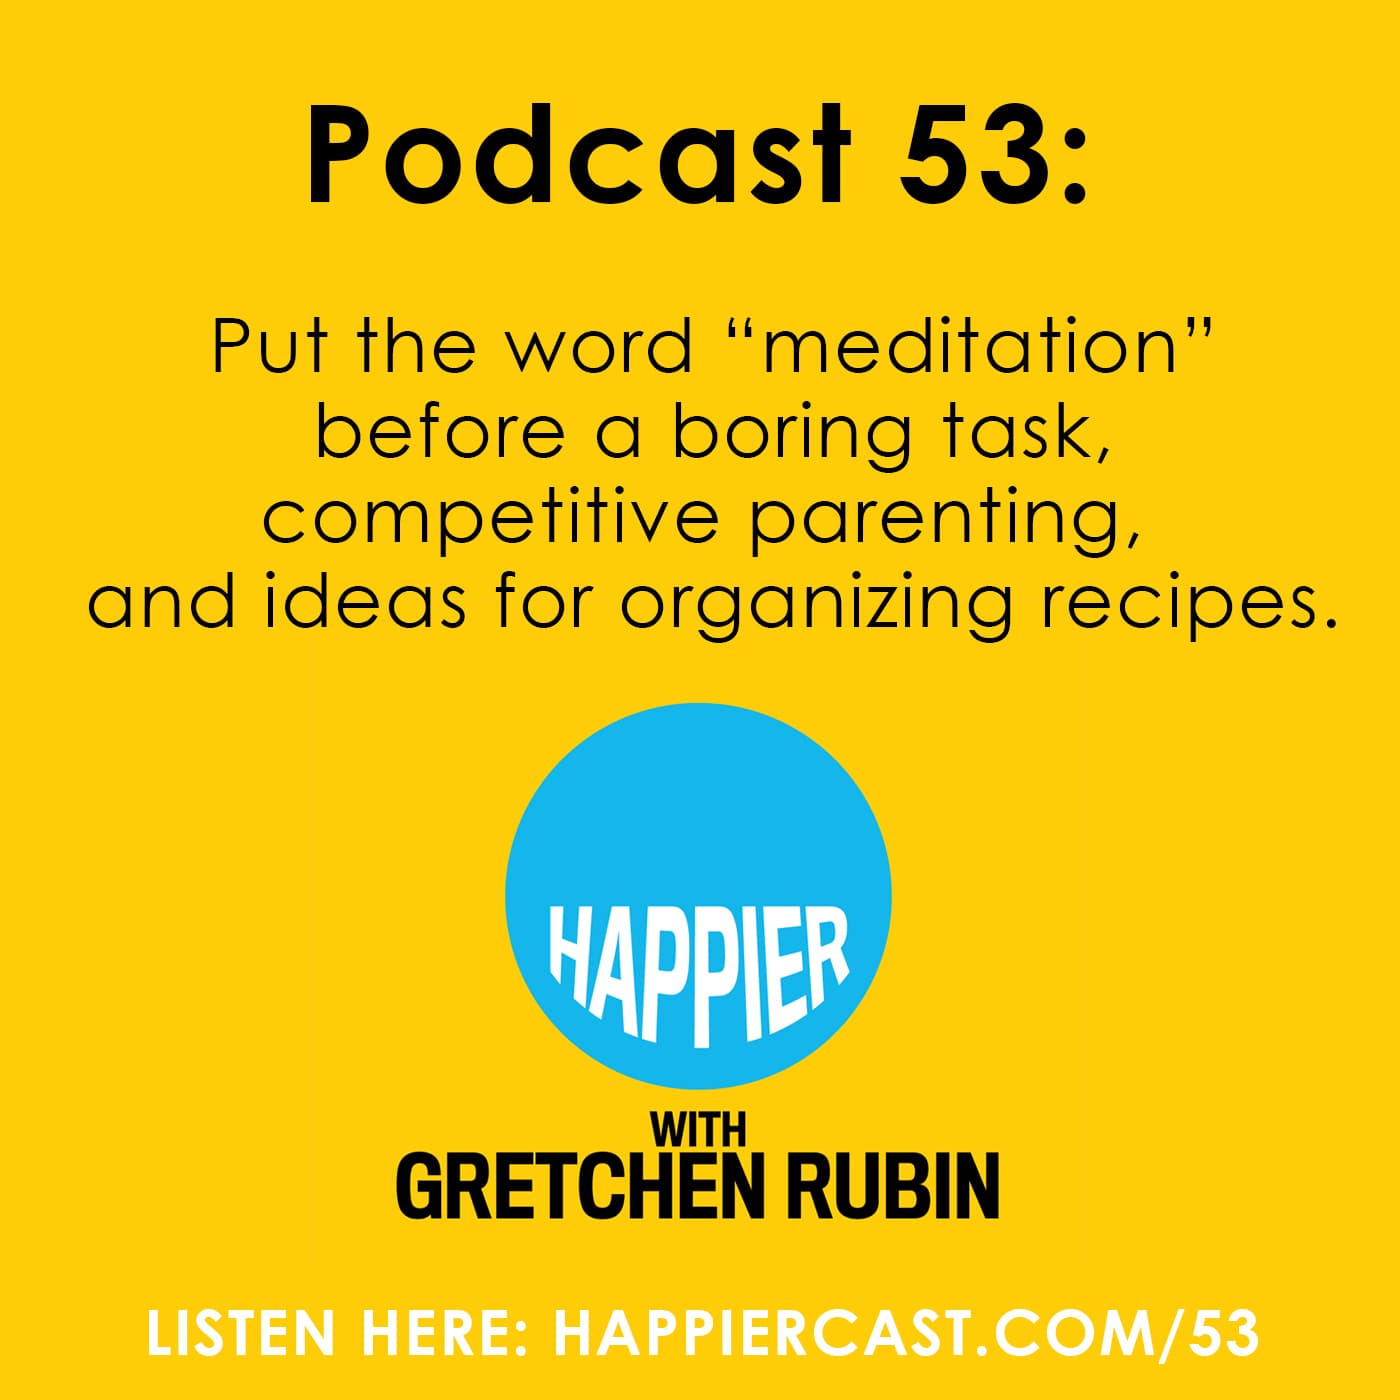 Gretchen Rubin - Happier Podcast #53